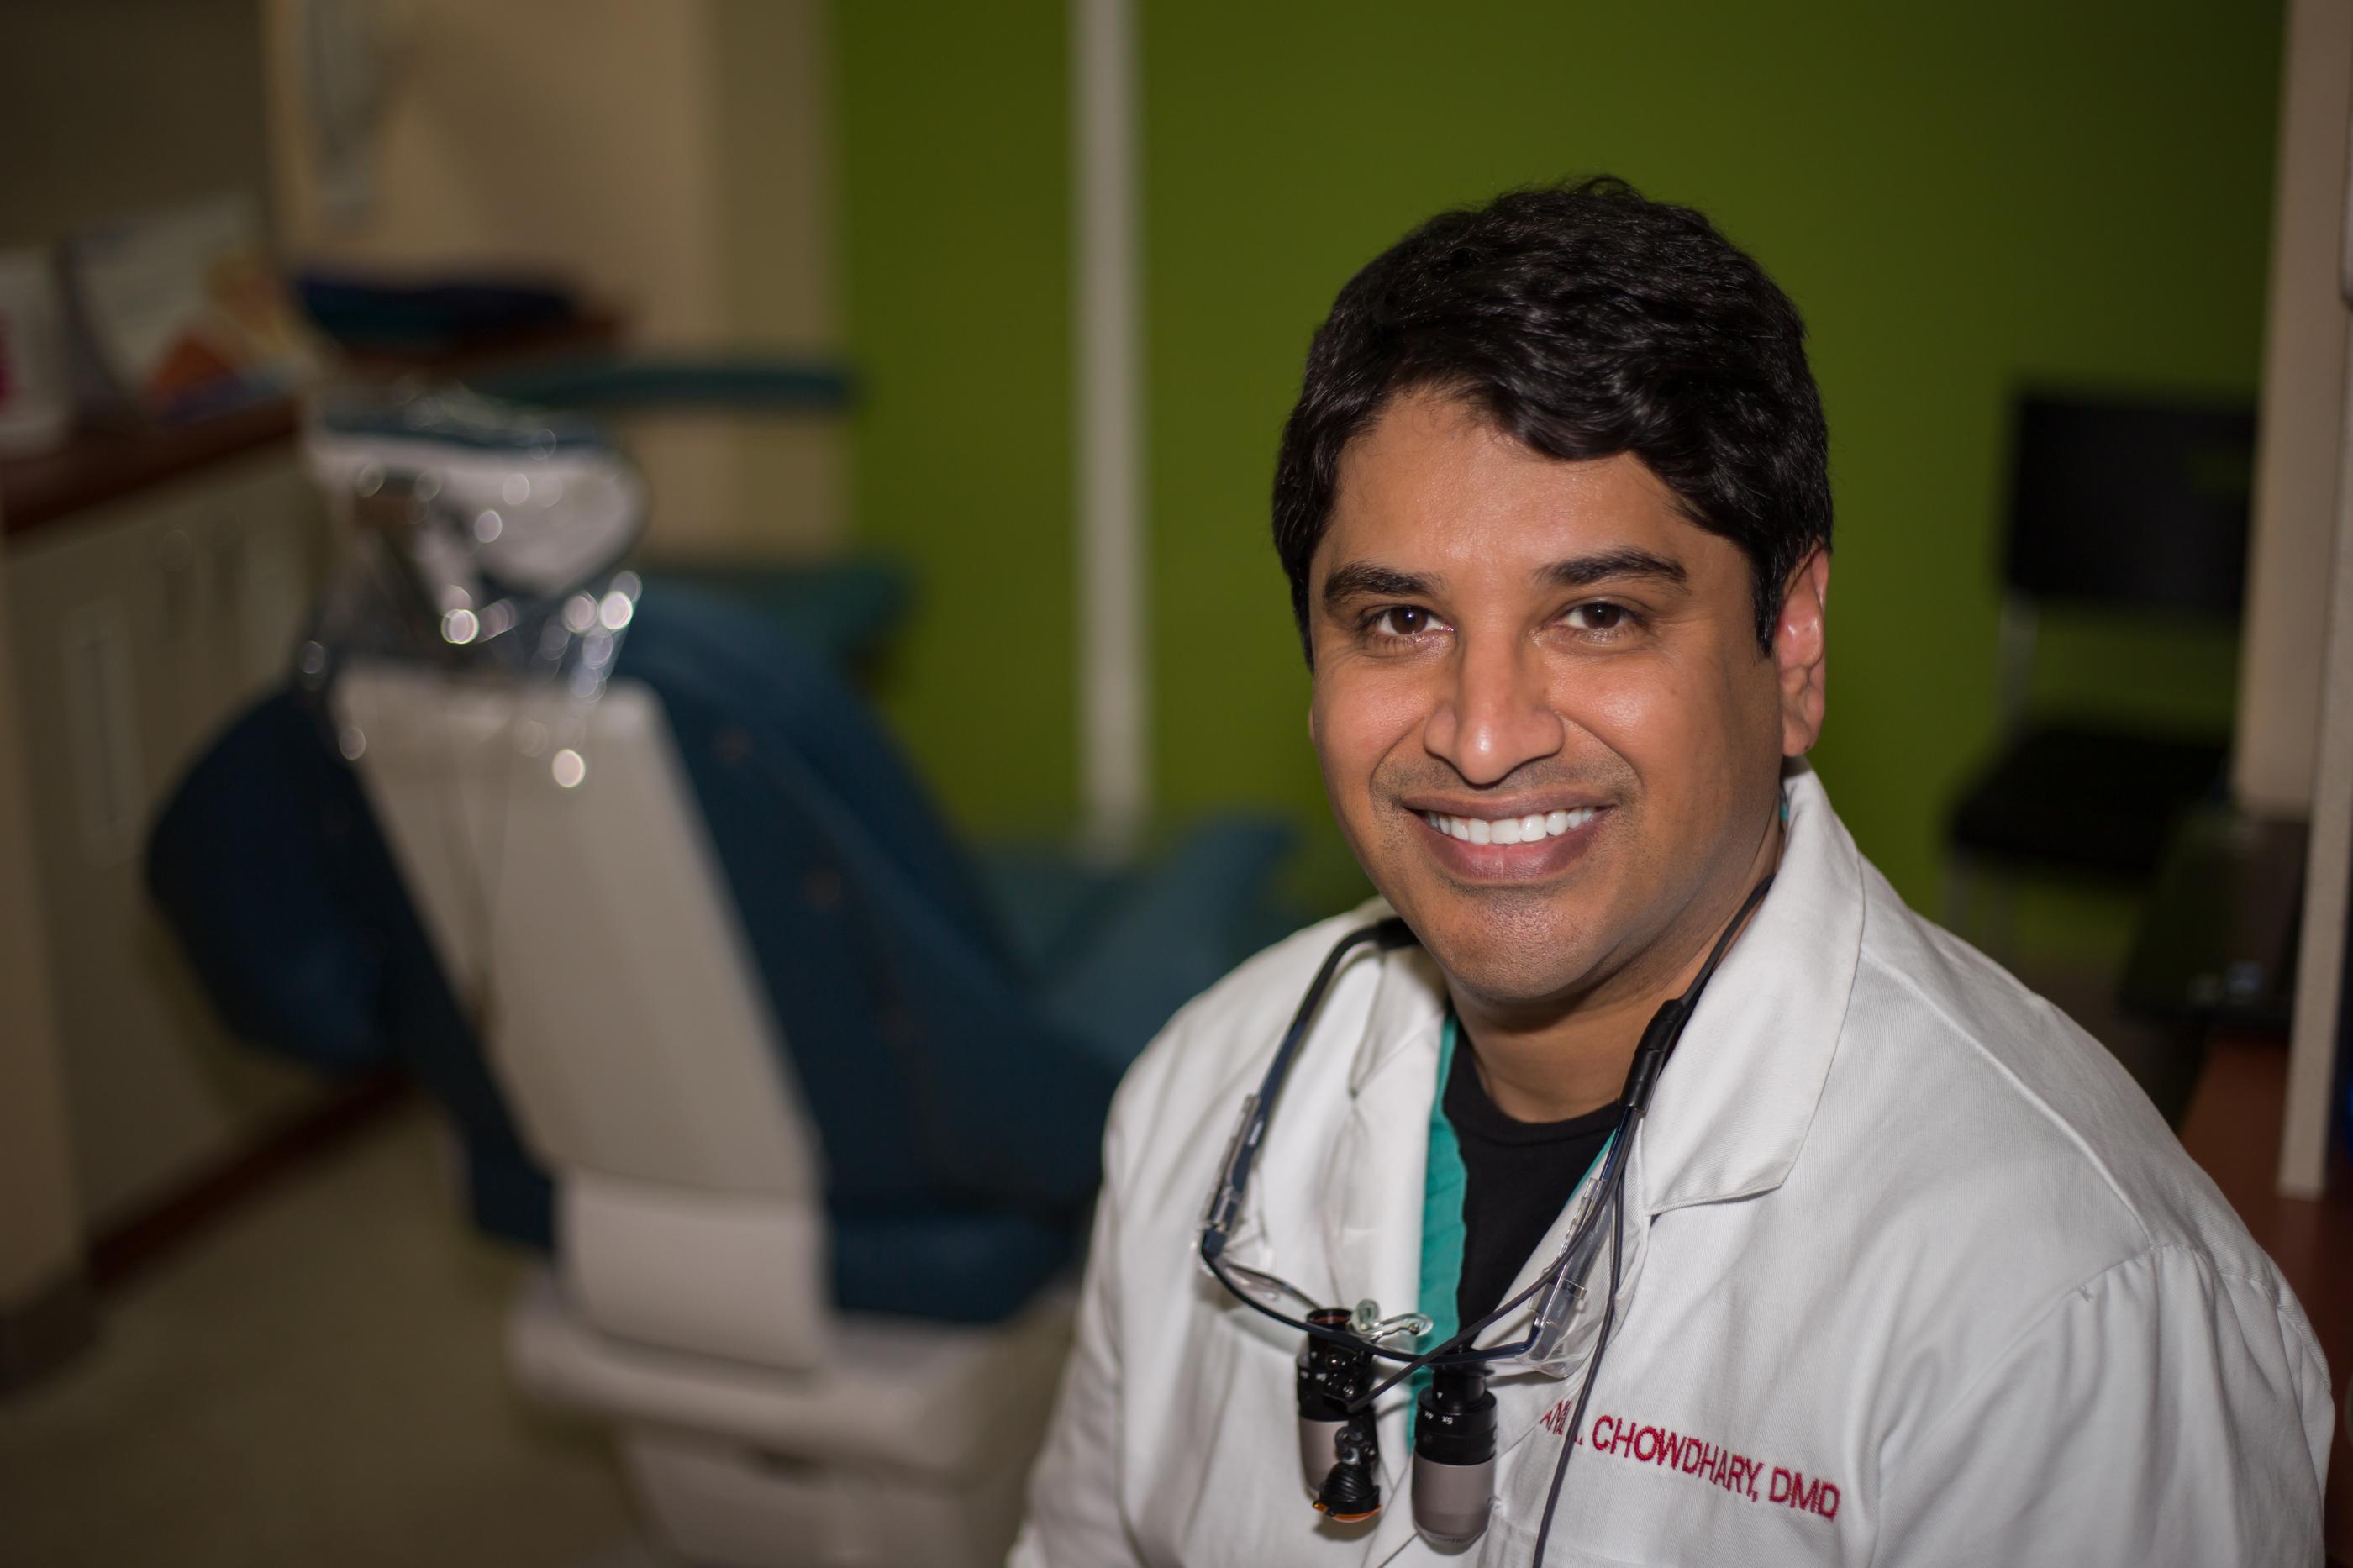 Anil Chowdhary DMD - Fremont CA Dentist - All Care Dental